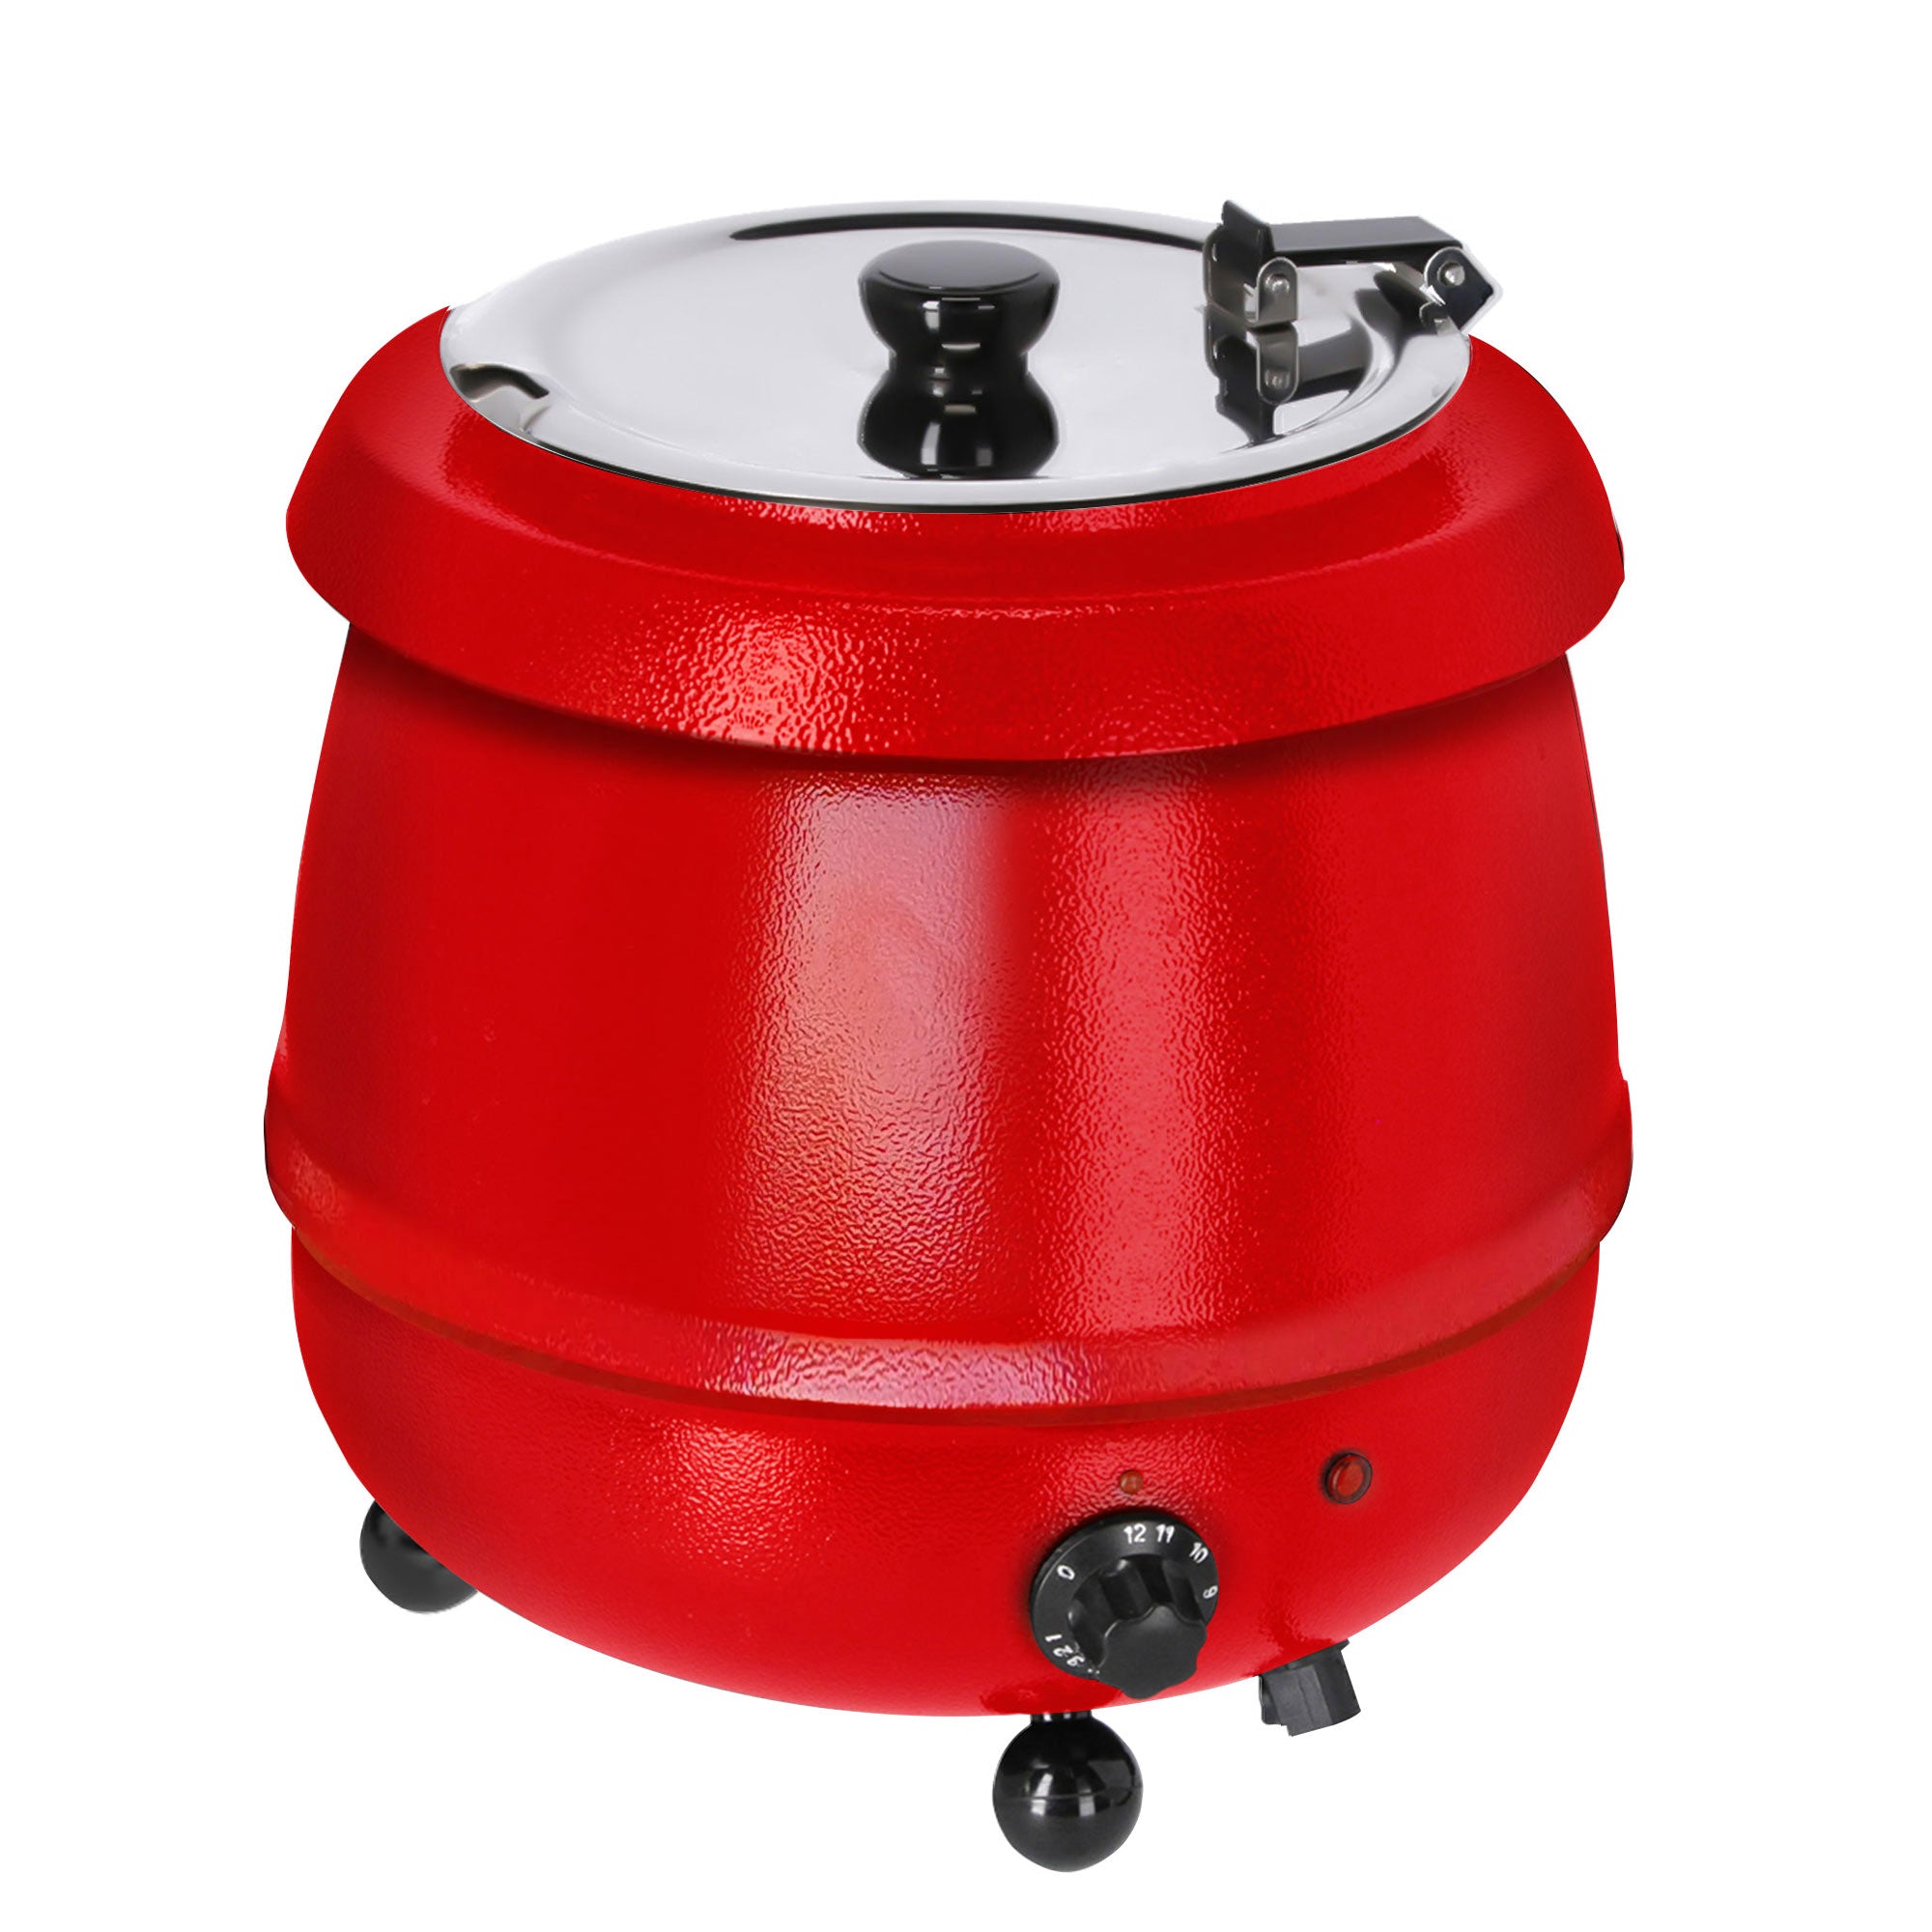 Suppevarmer - 9 liter - Rød